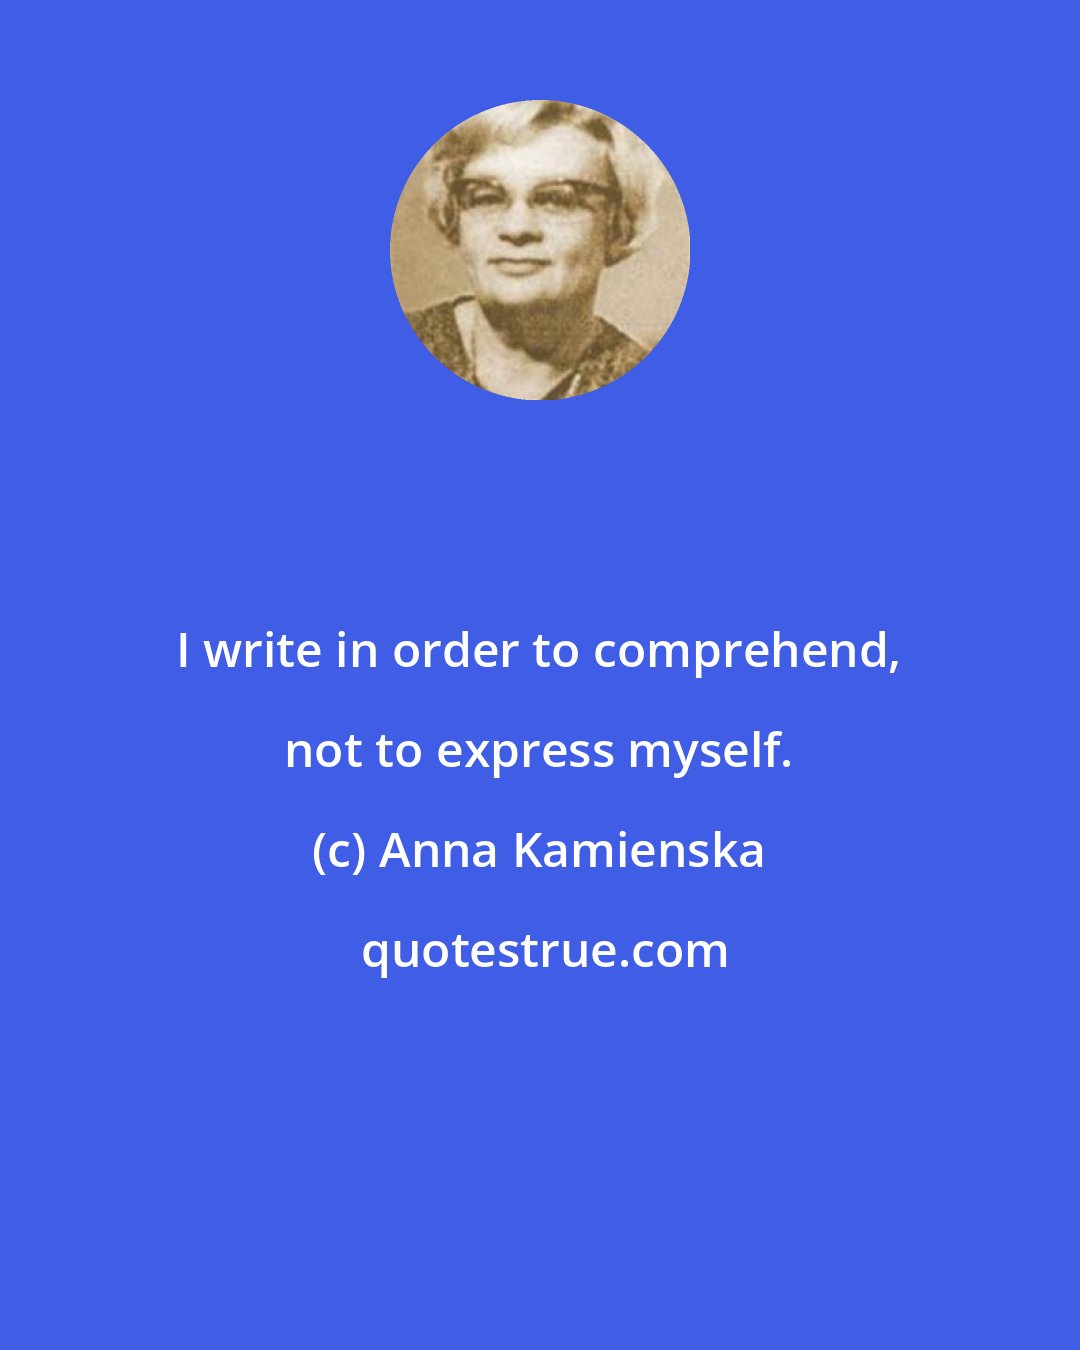 Anna Kamienska: I write in order to comprehend, not to express myself.